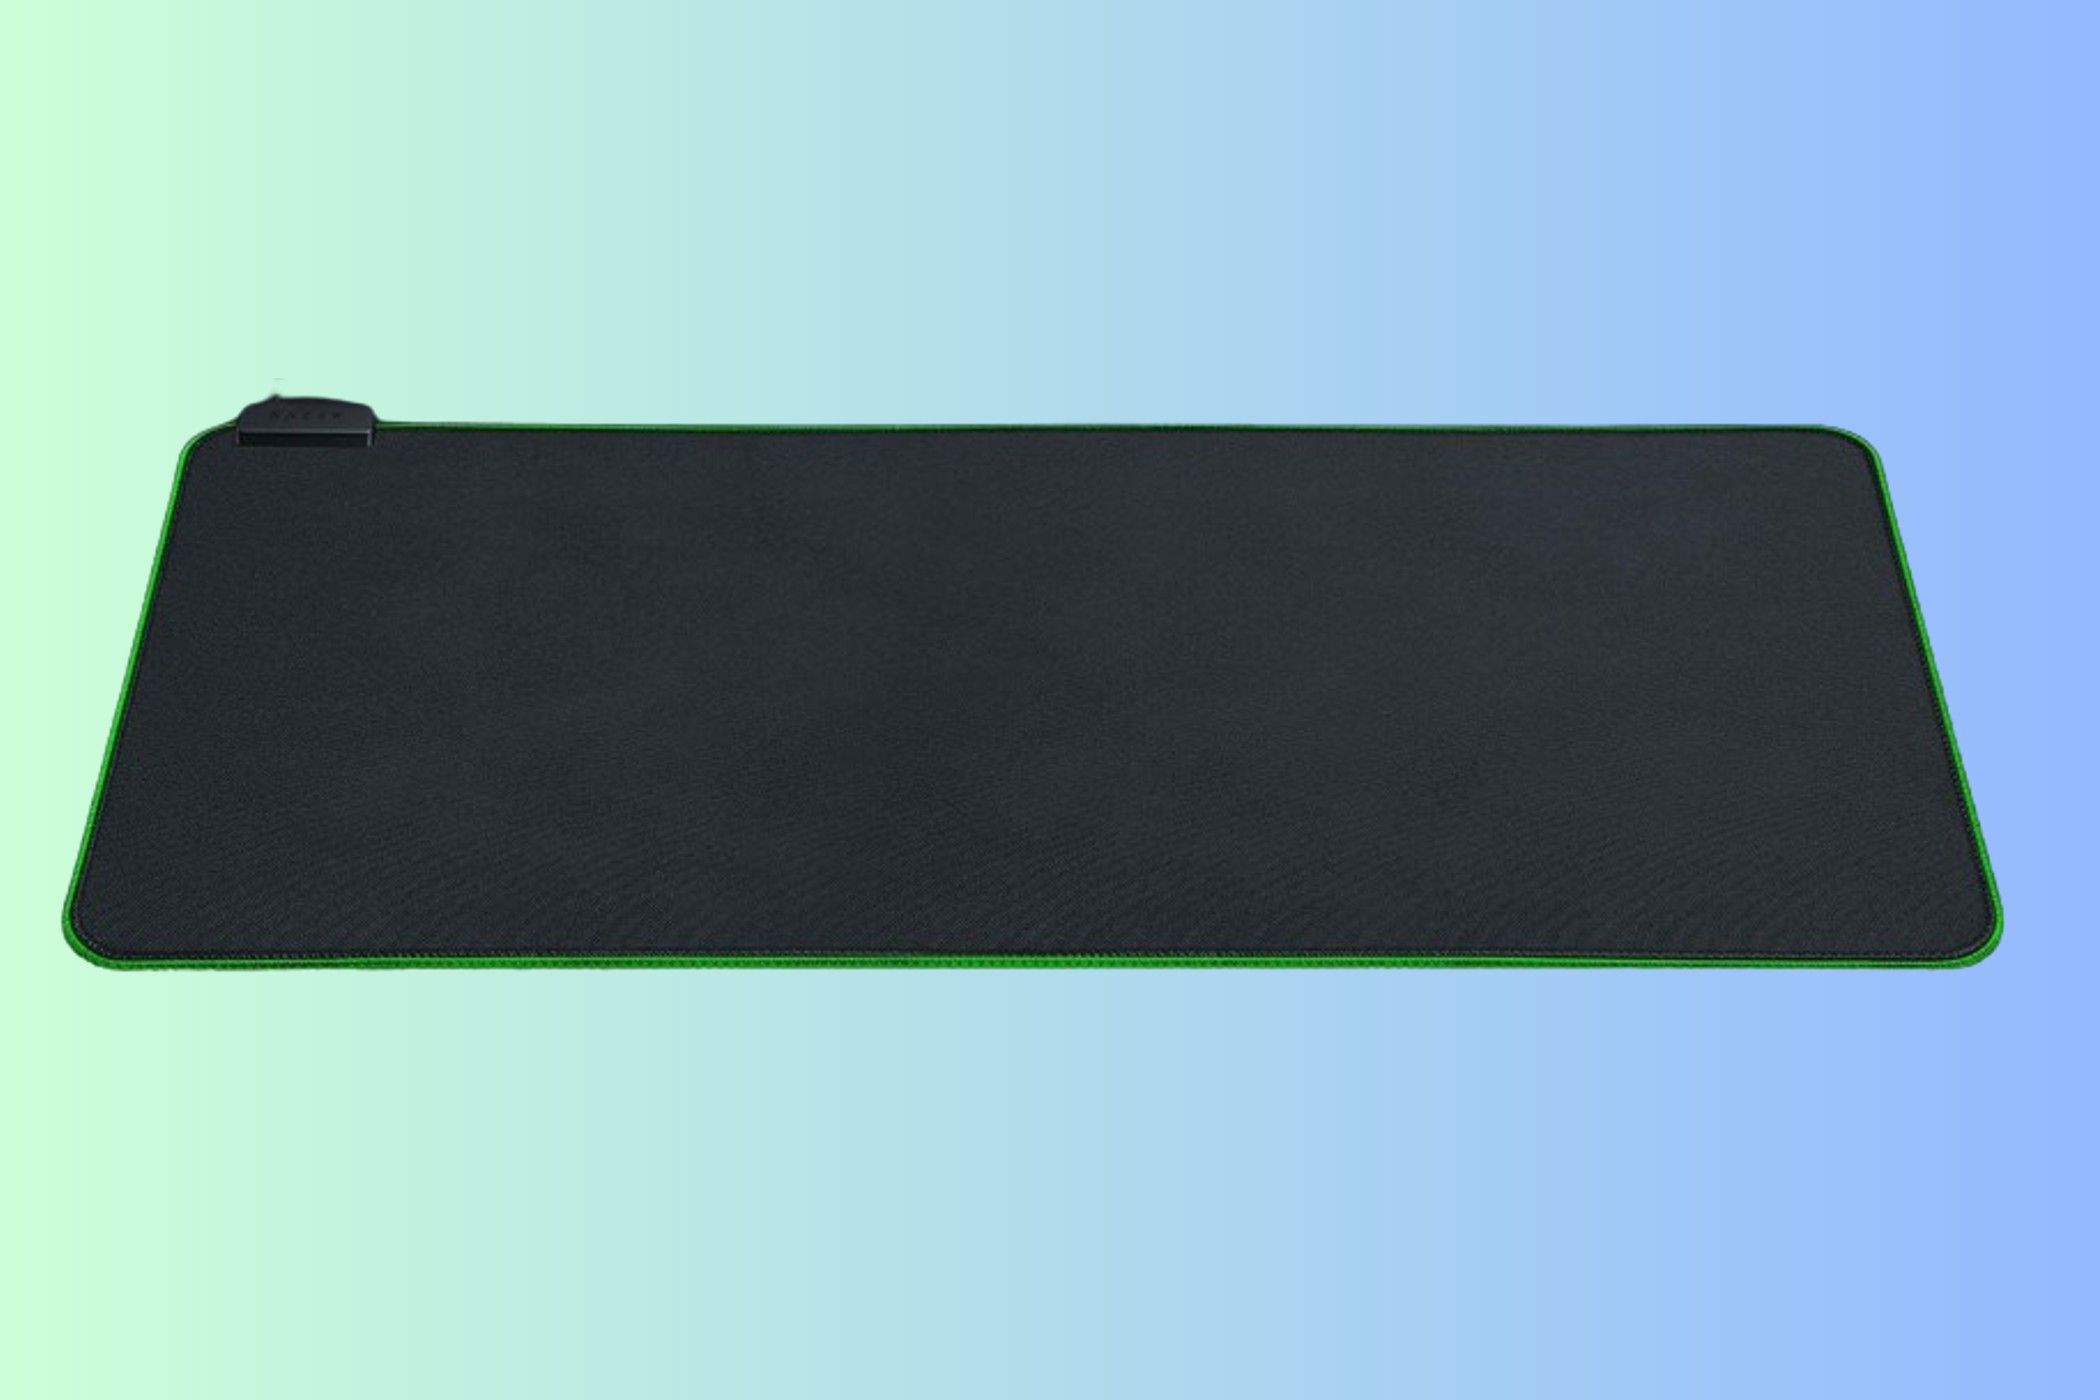 Razer Goliathus RGB Extended Chroma Gaming Mouse Pad on gradient background